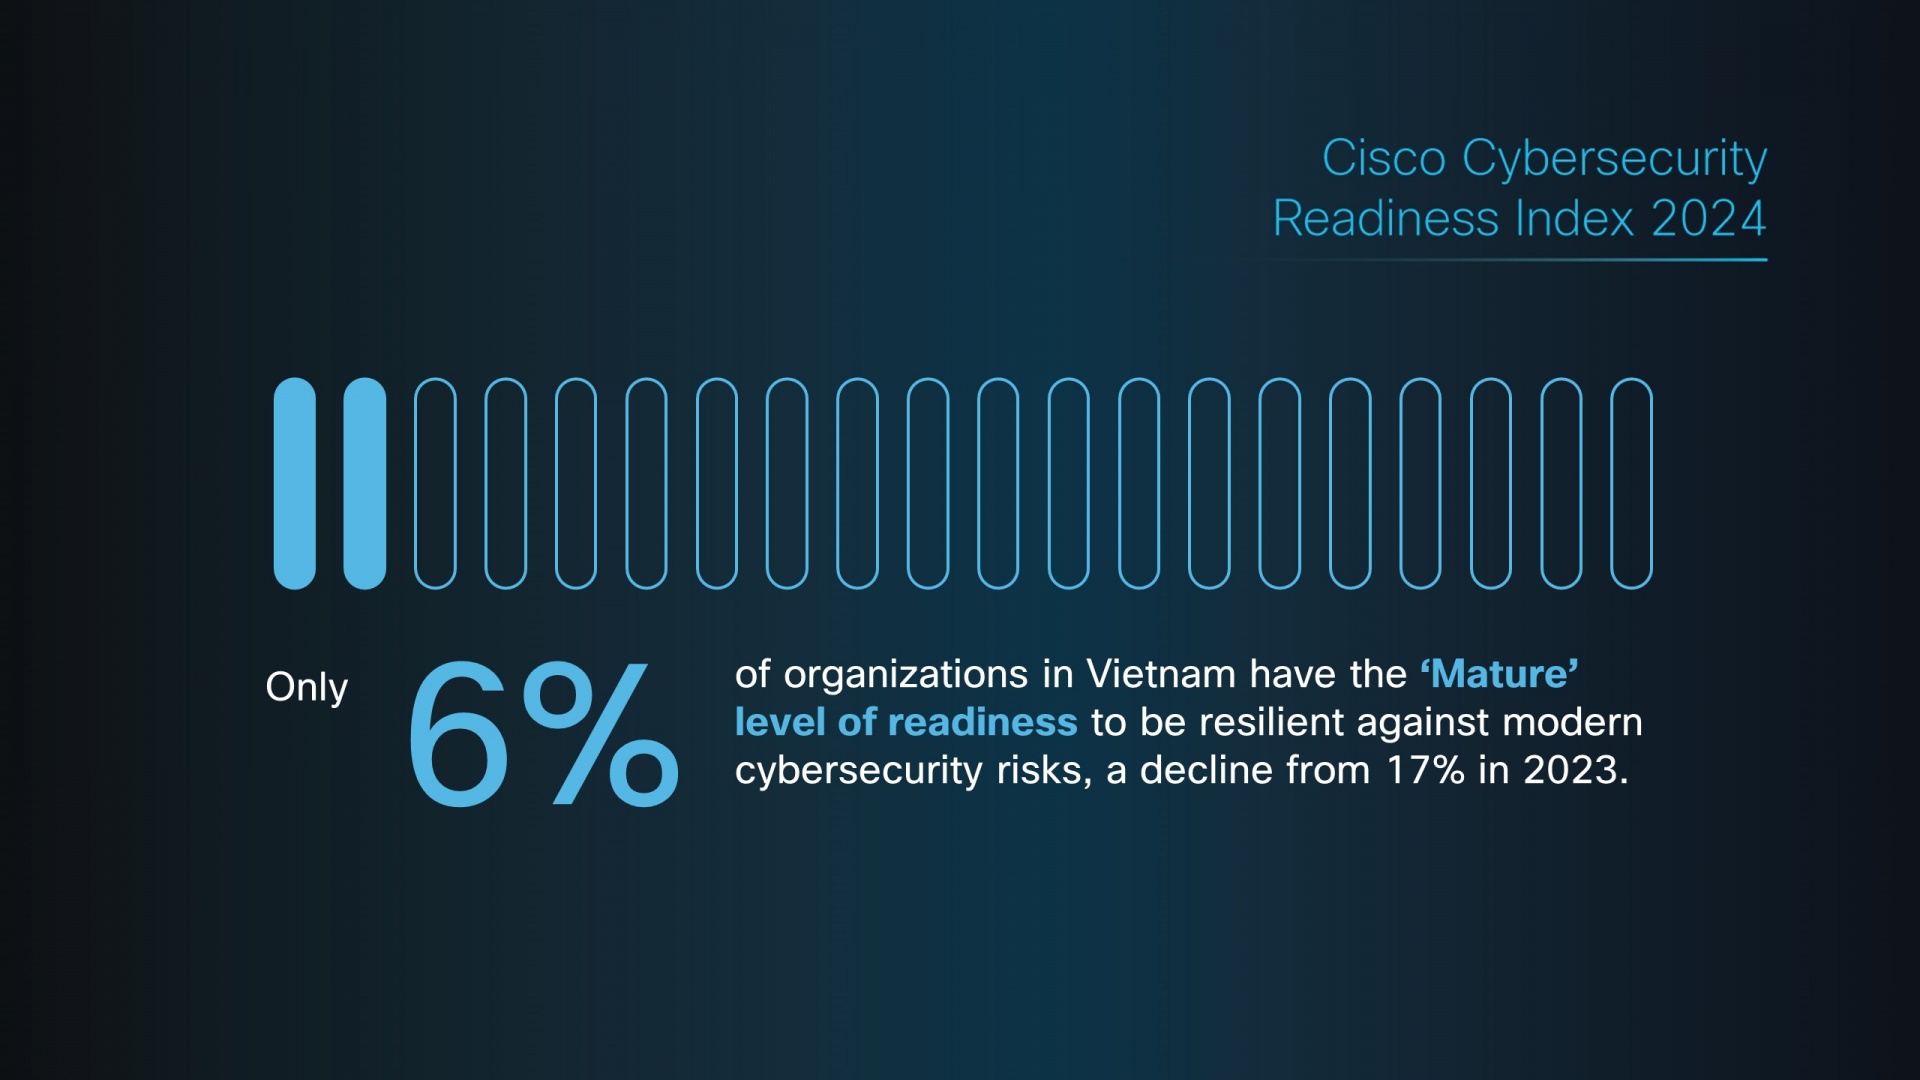 Few organisations prepared for cyber threats: Cisco